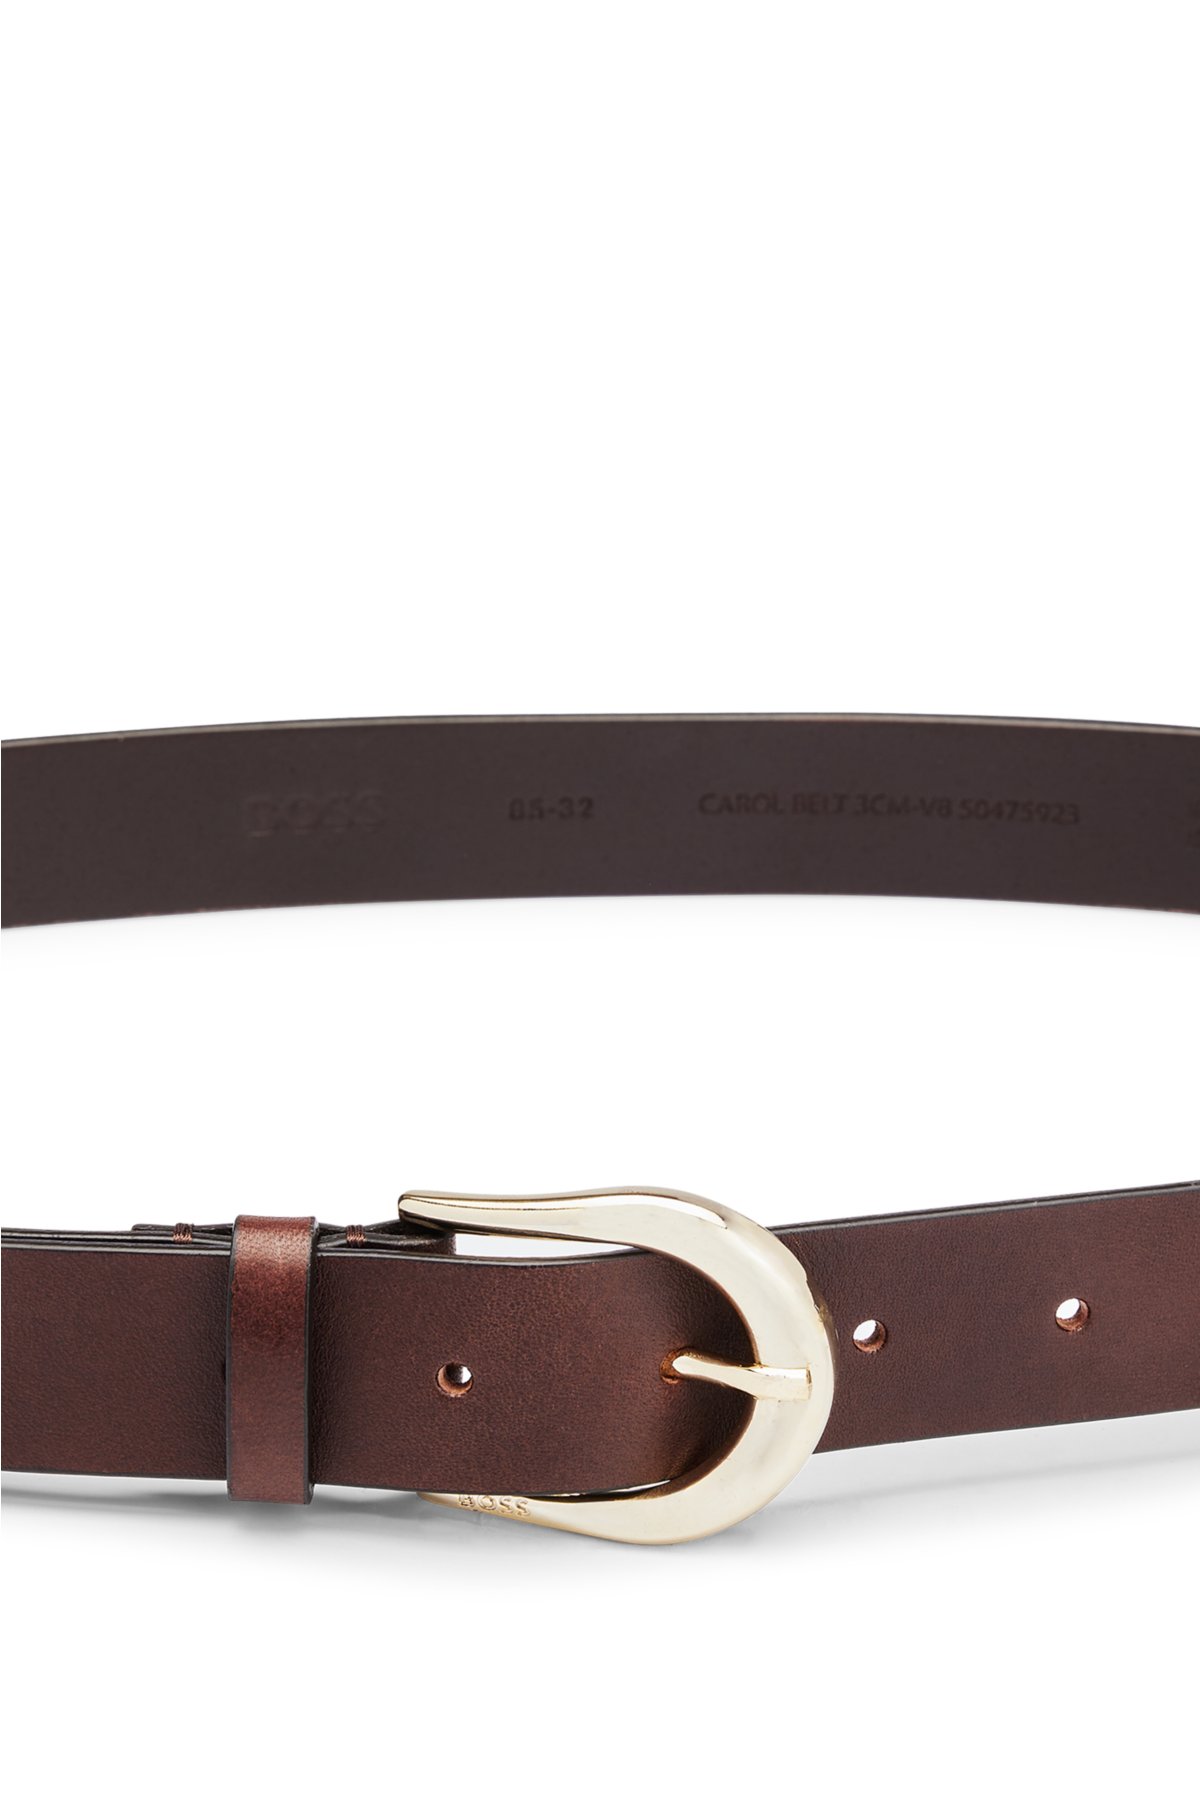 BOSS - Pin-buckle belt in Italian suede with branded keeper